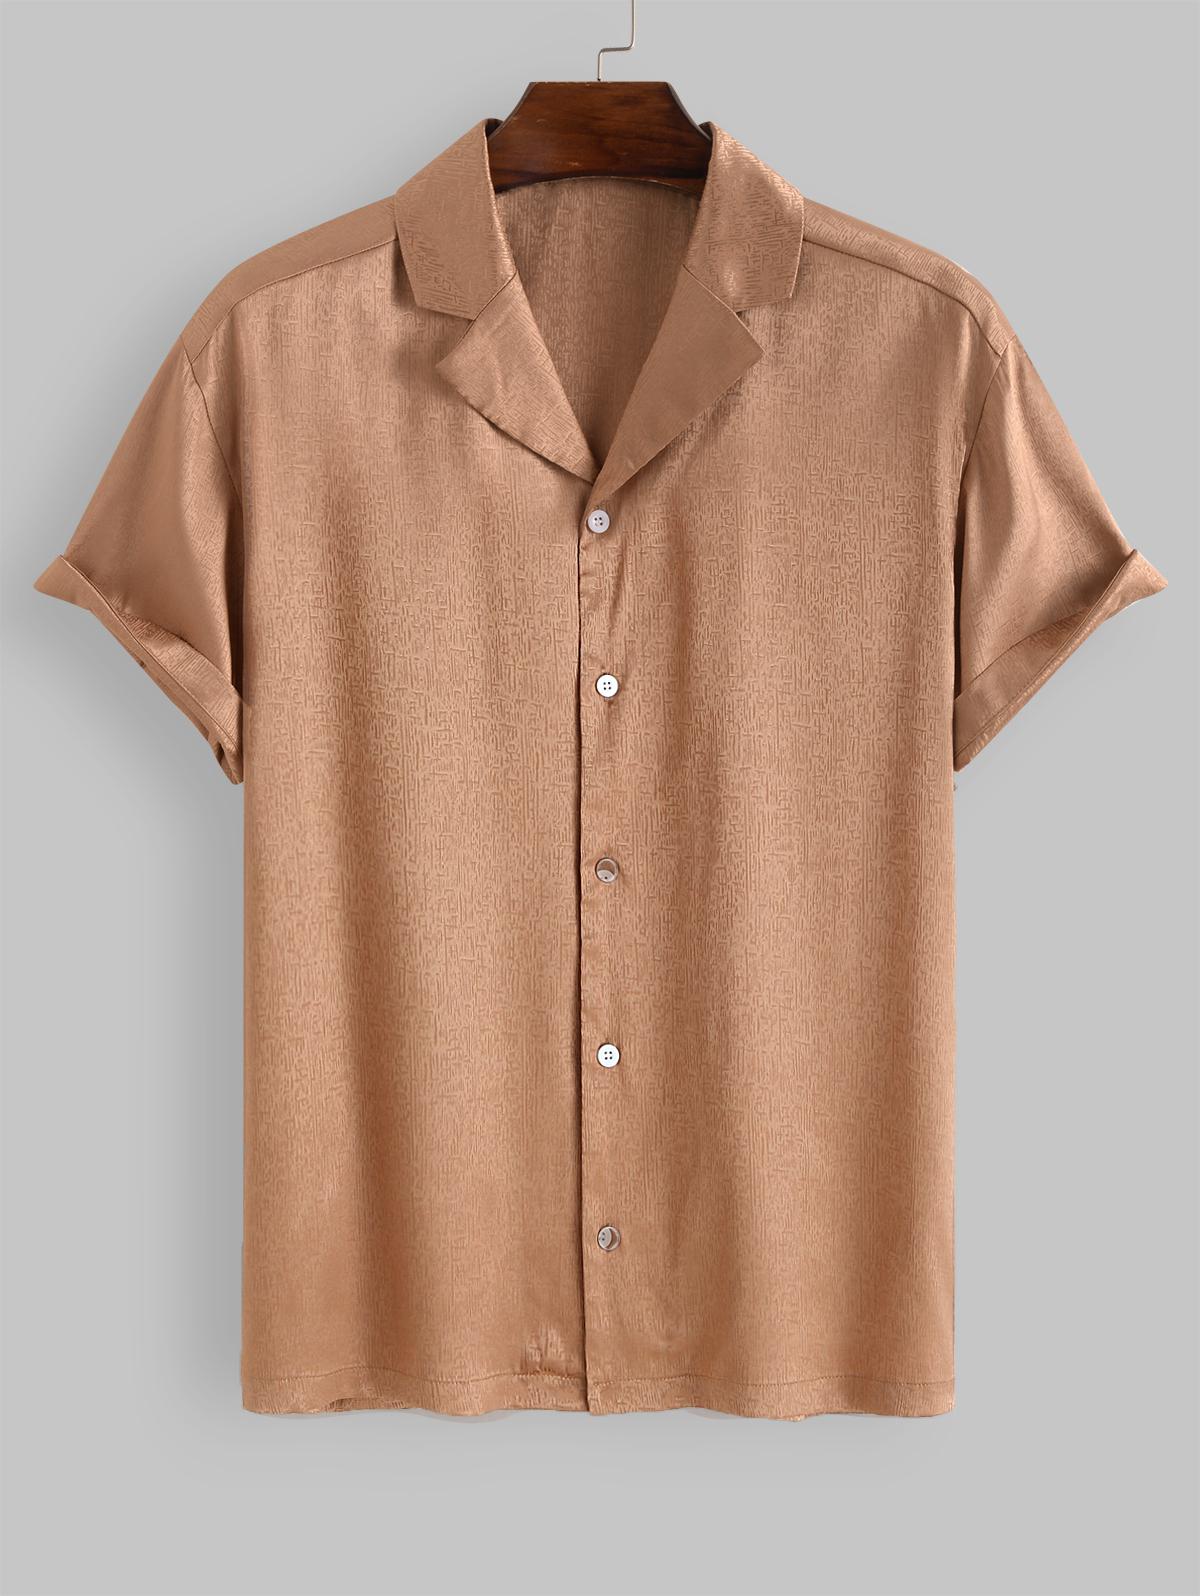 ZAFUL Men's ZAFUL Jacquard Button Front Short Sleeves Satin Shirt M Coffee